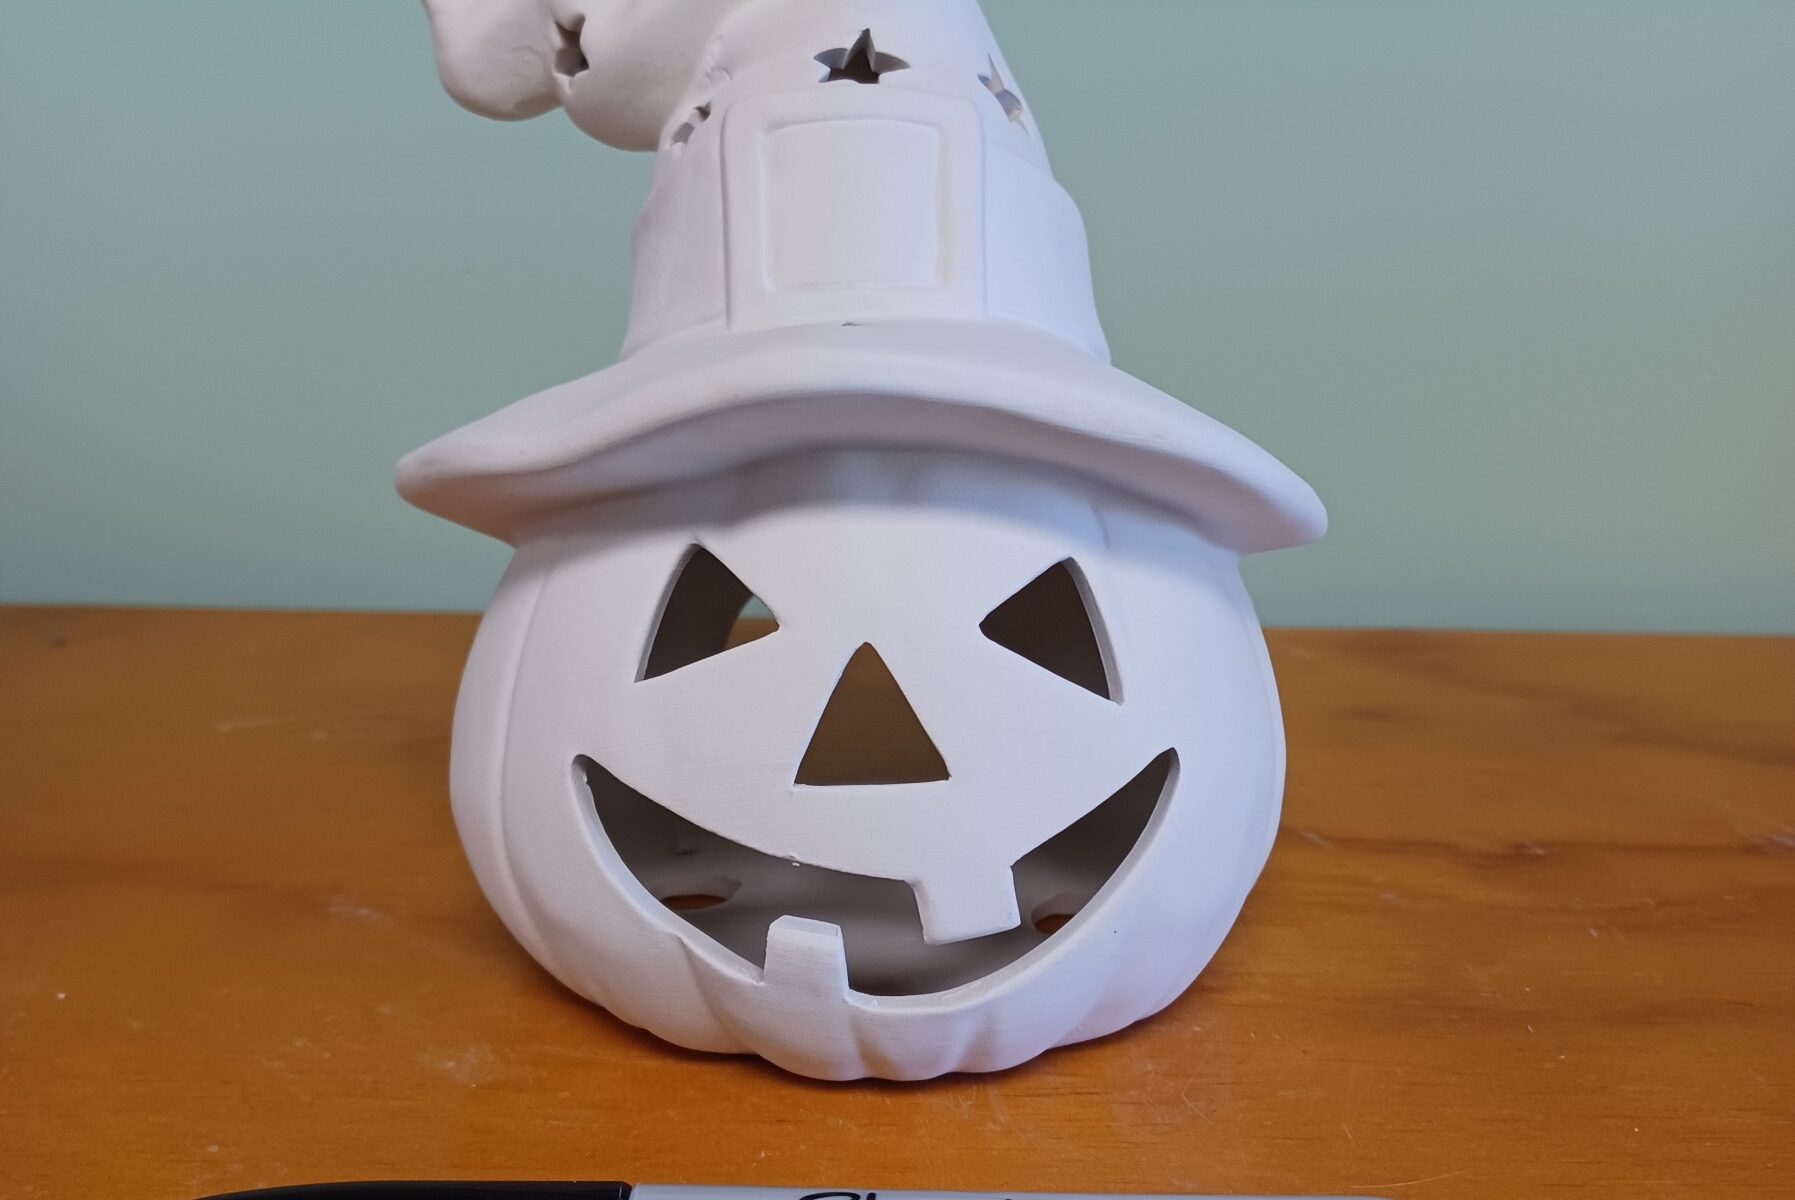 Witch Hat Jack-O-Lantern